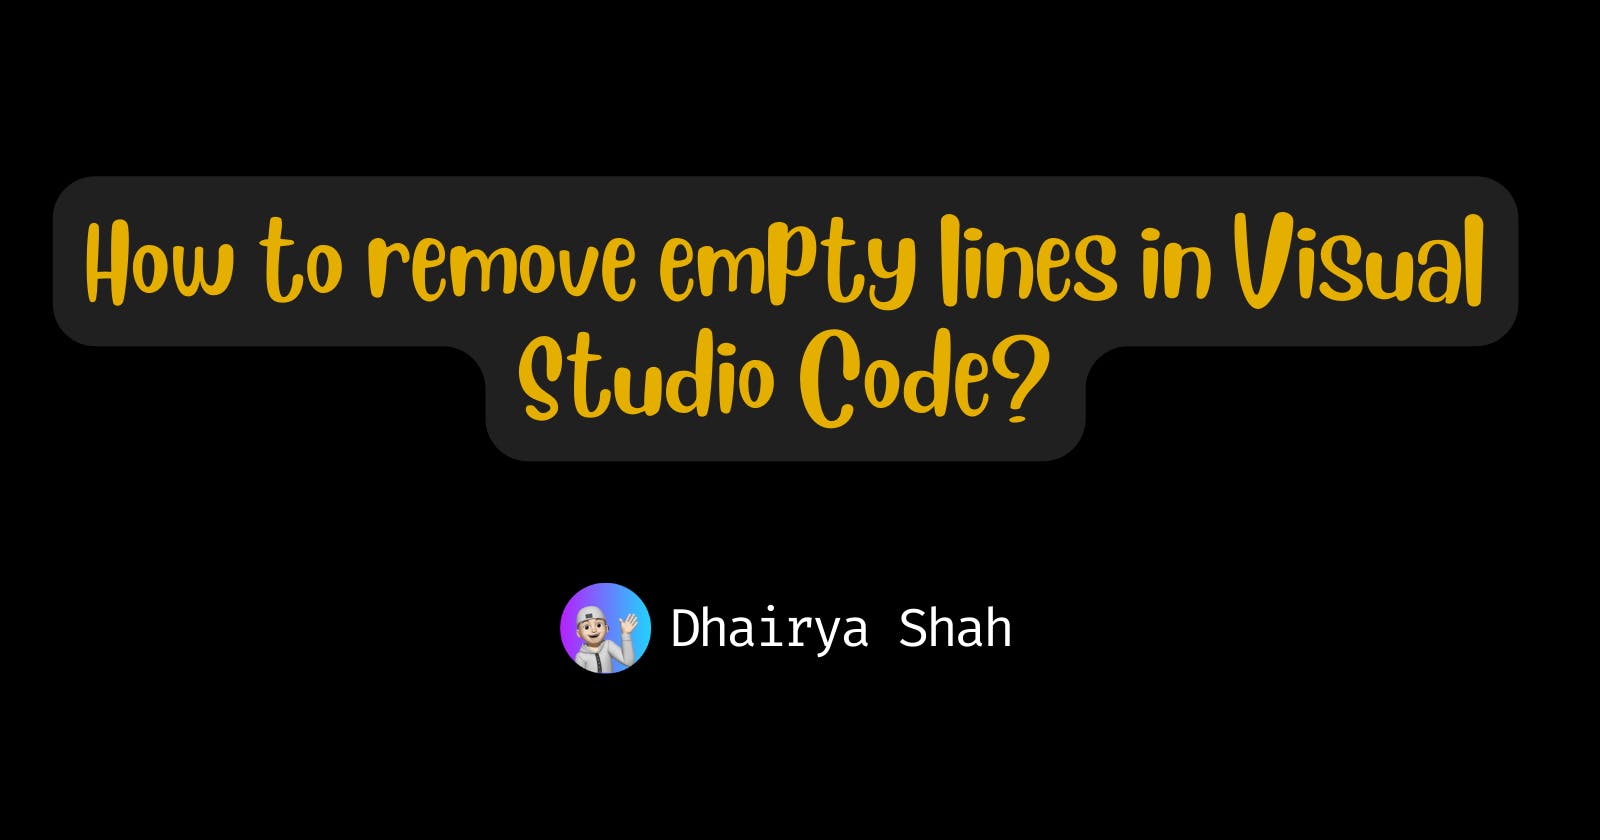 How to remove empty lines in Visual Studio Code?